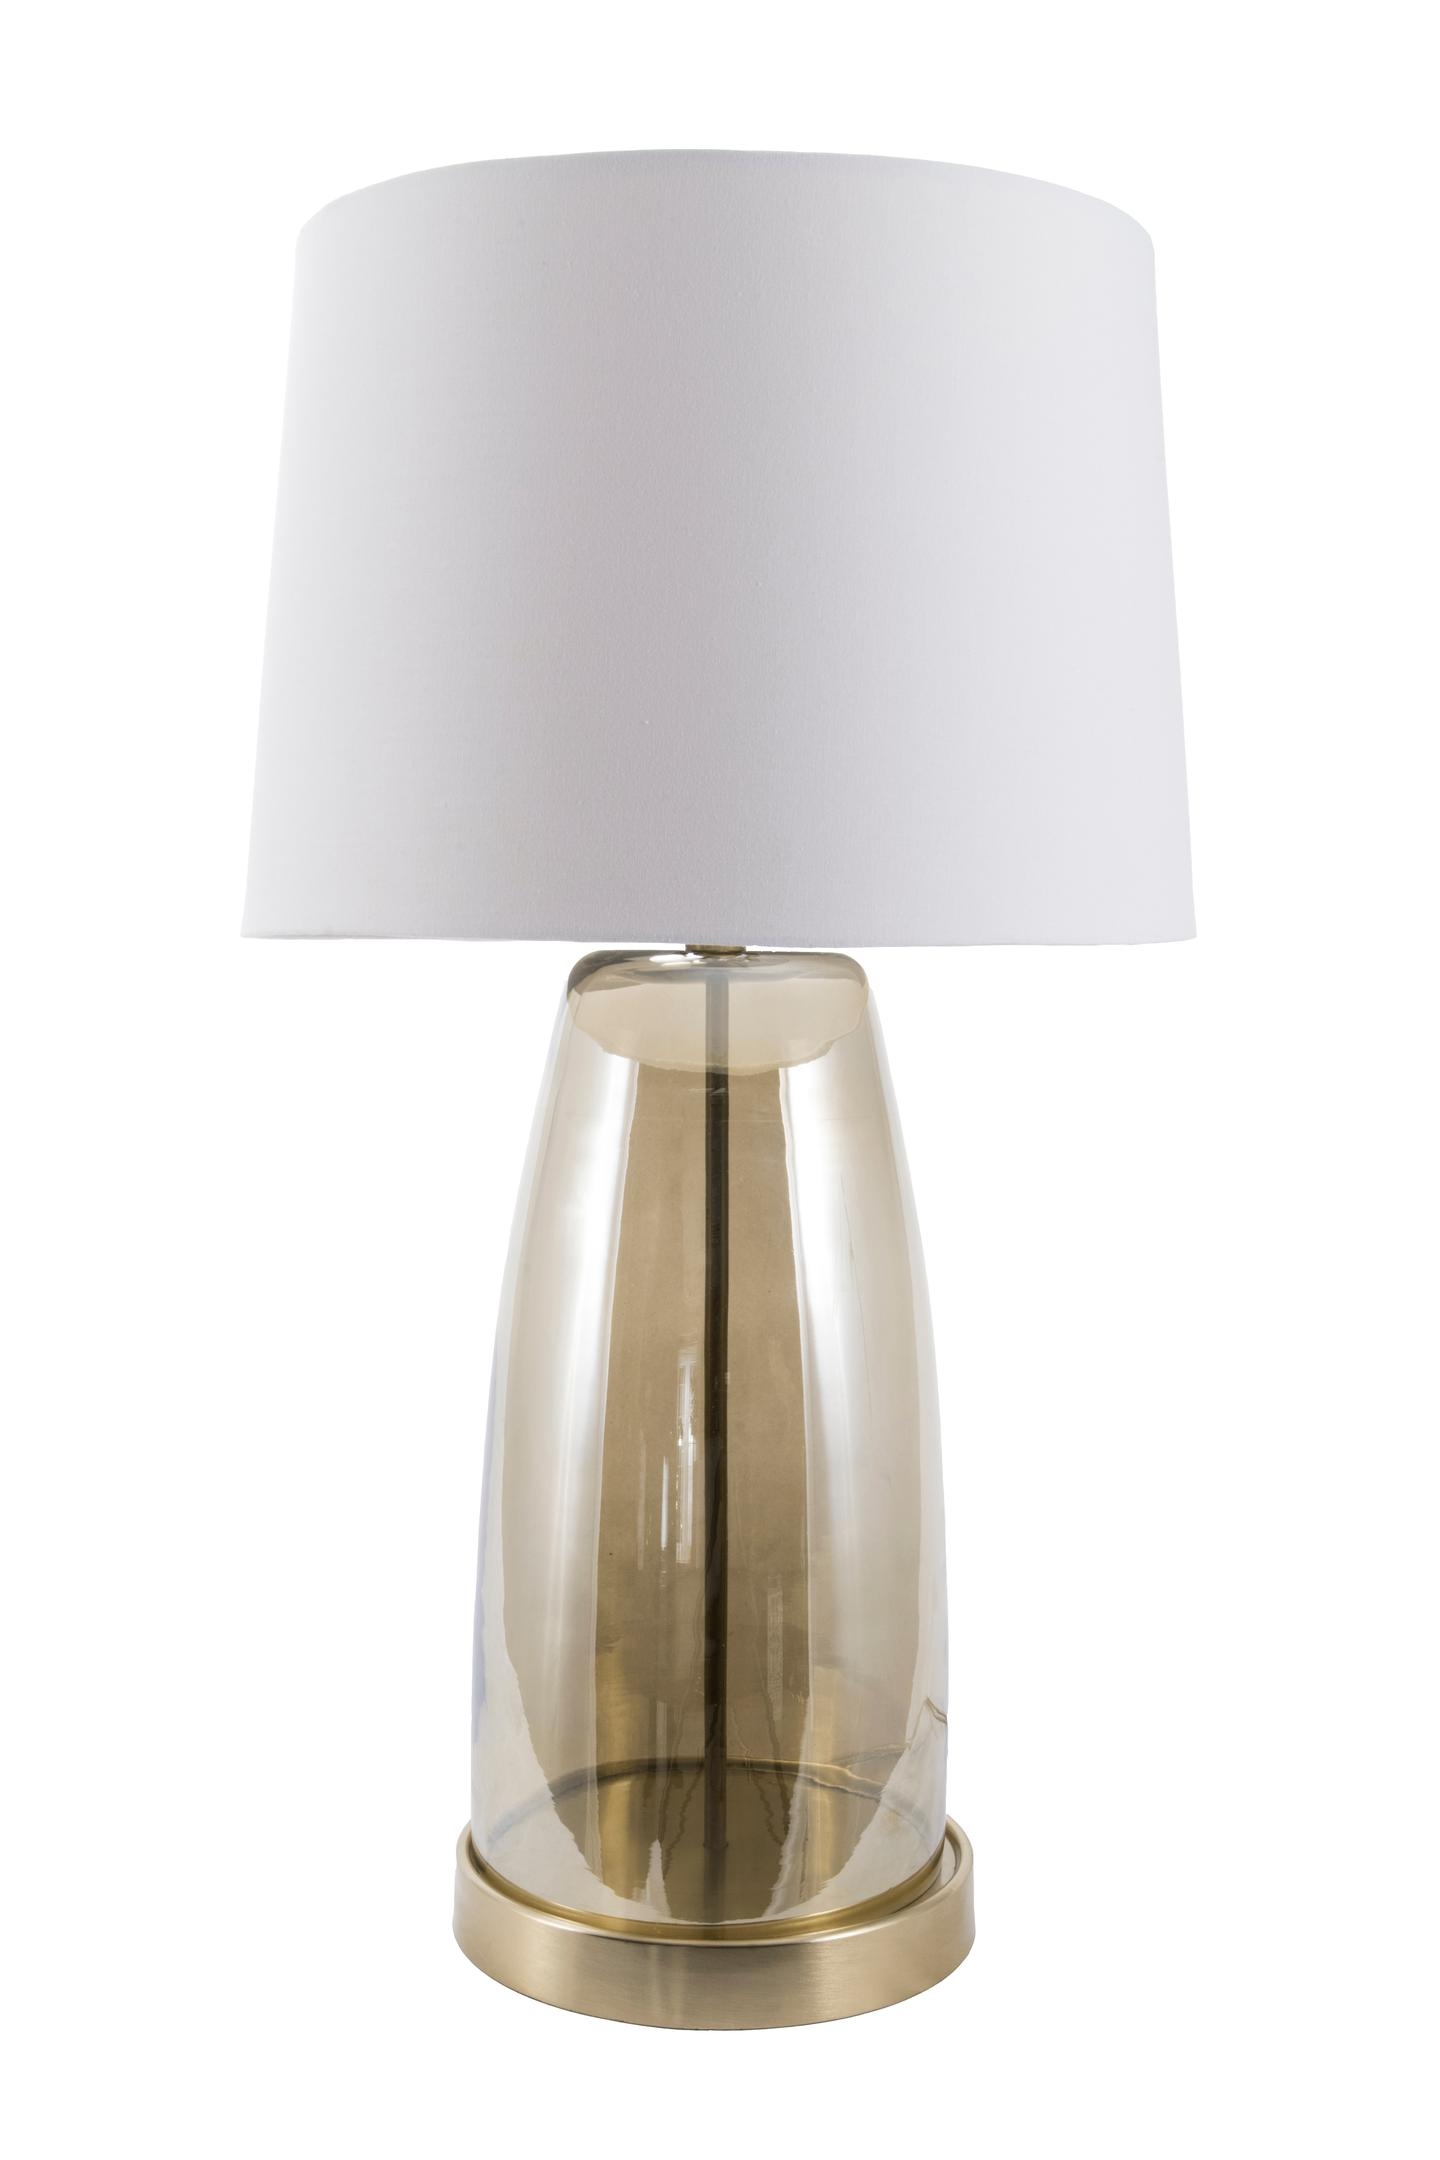 Fresno 28" Glass Table Lamp - Image 1